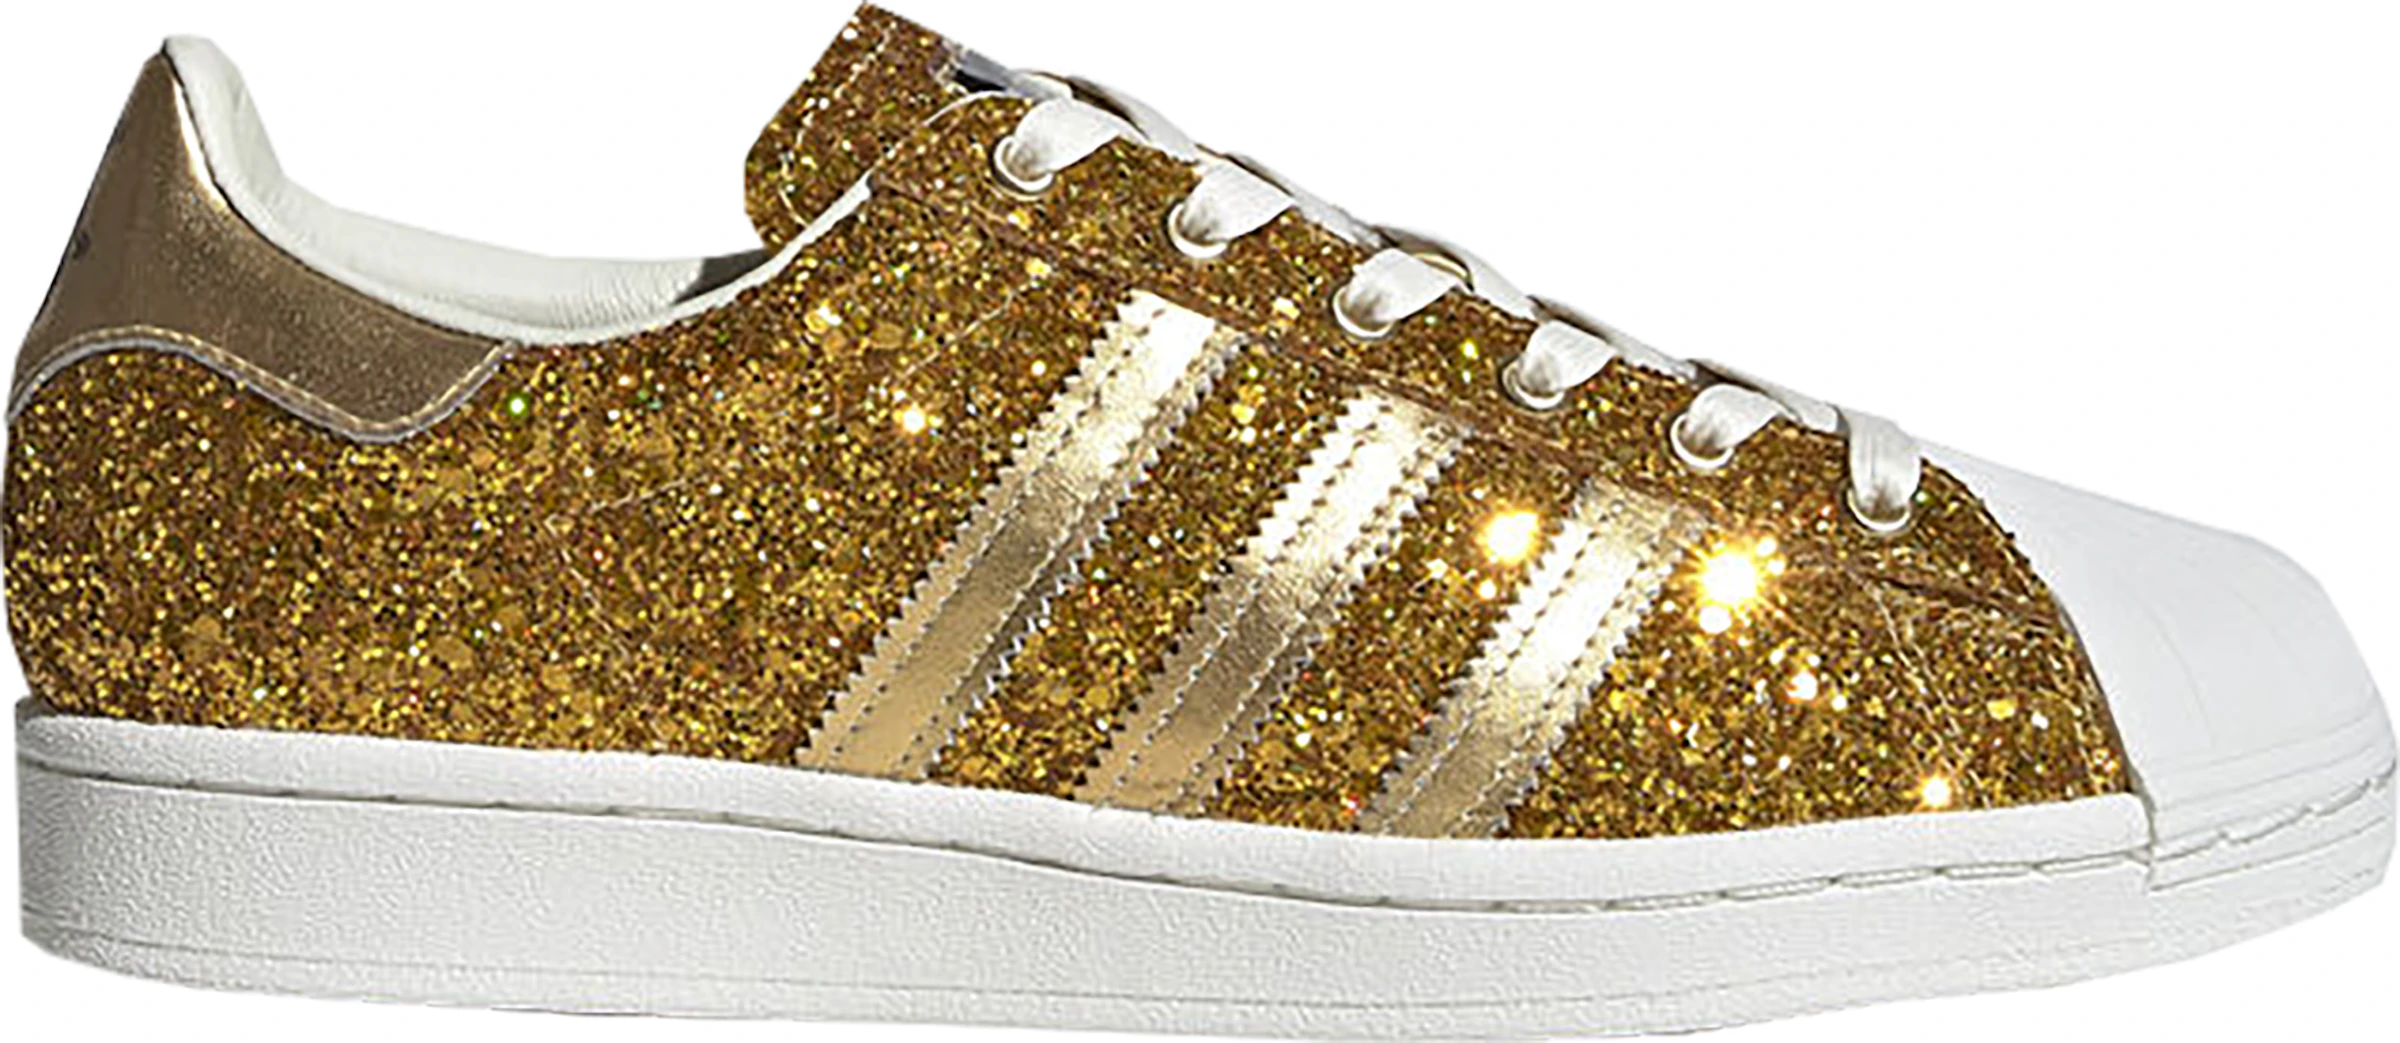 Adidas Superstar Gold Kaufen | peacecommission.kdsg.gov.ng